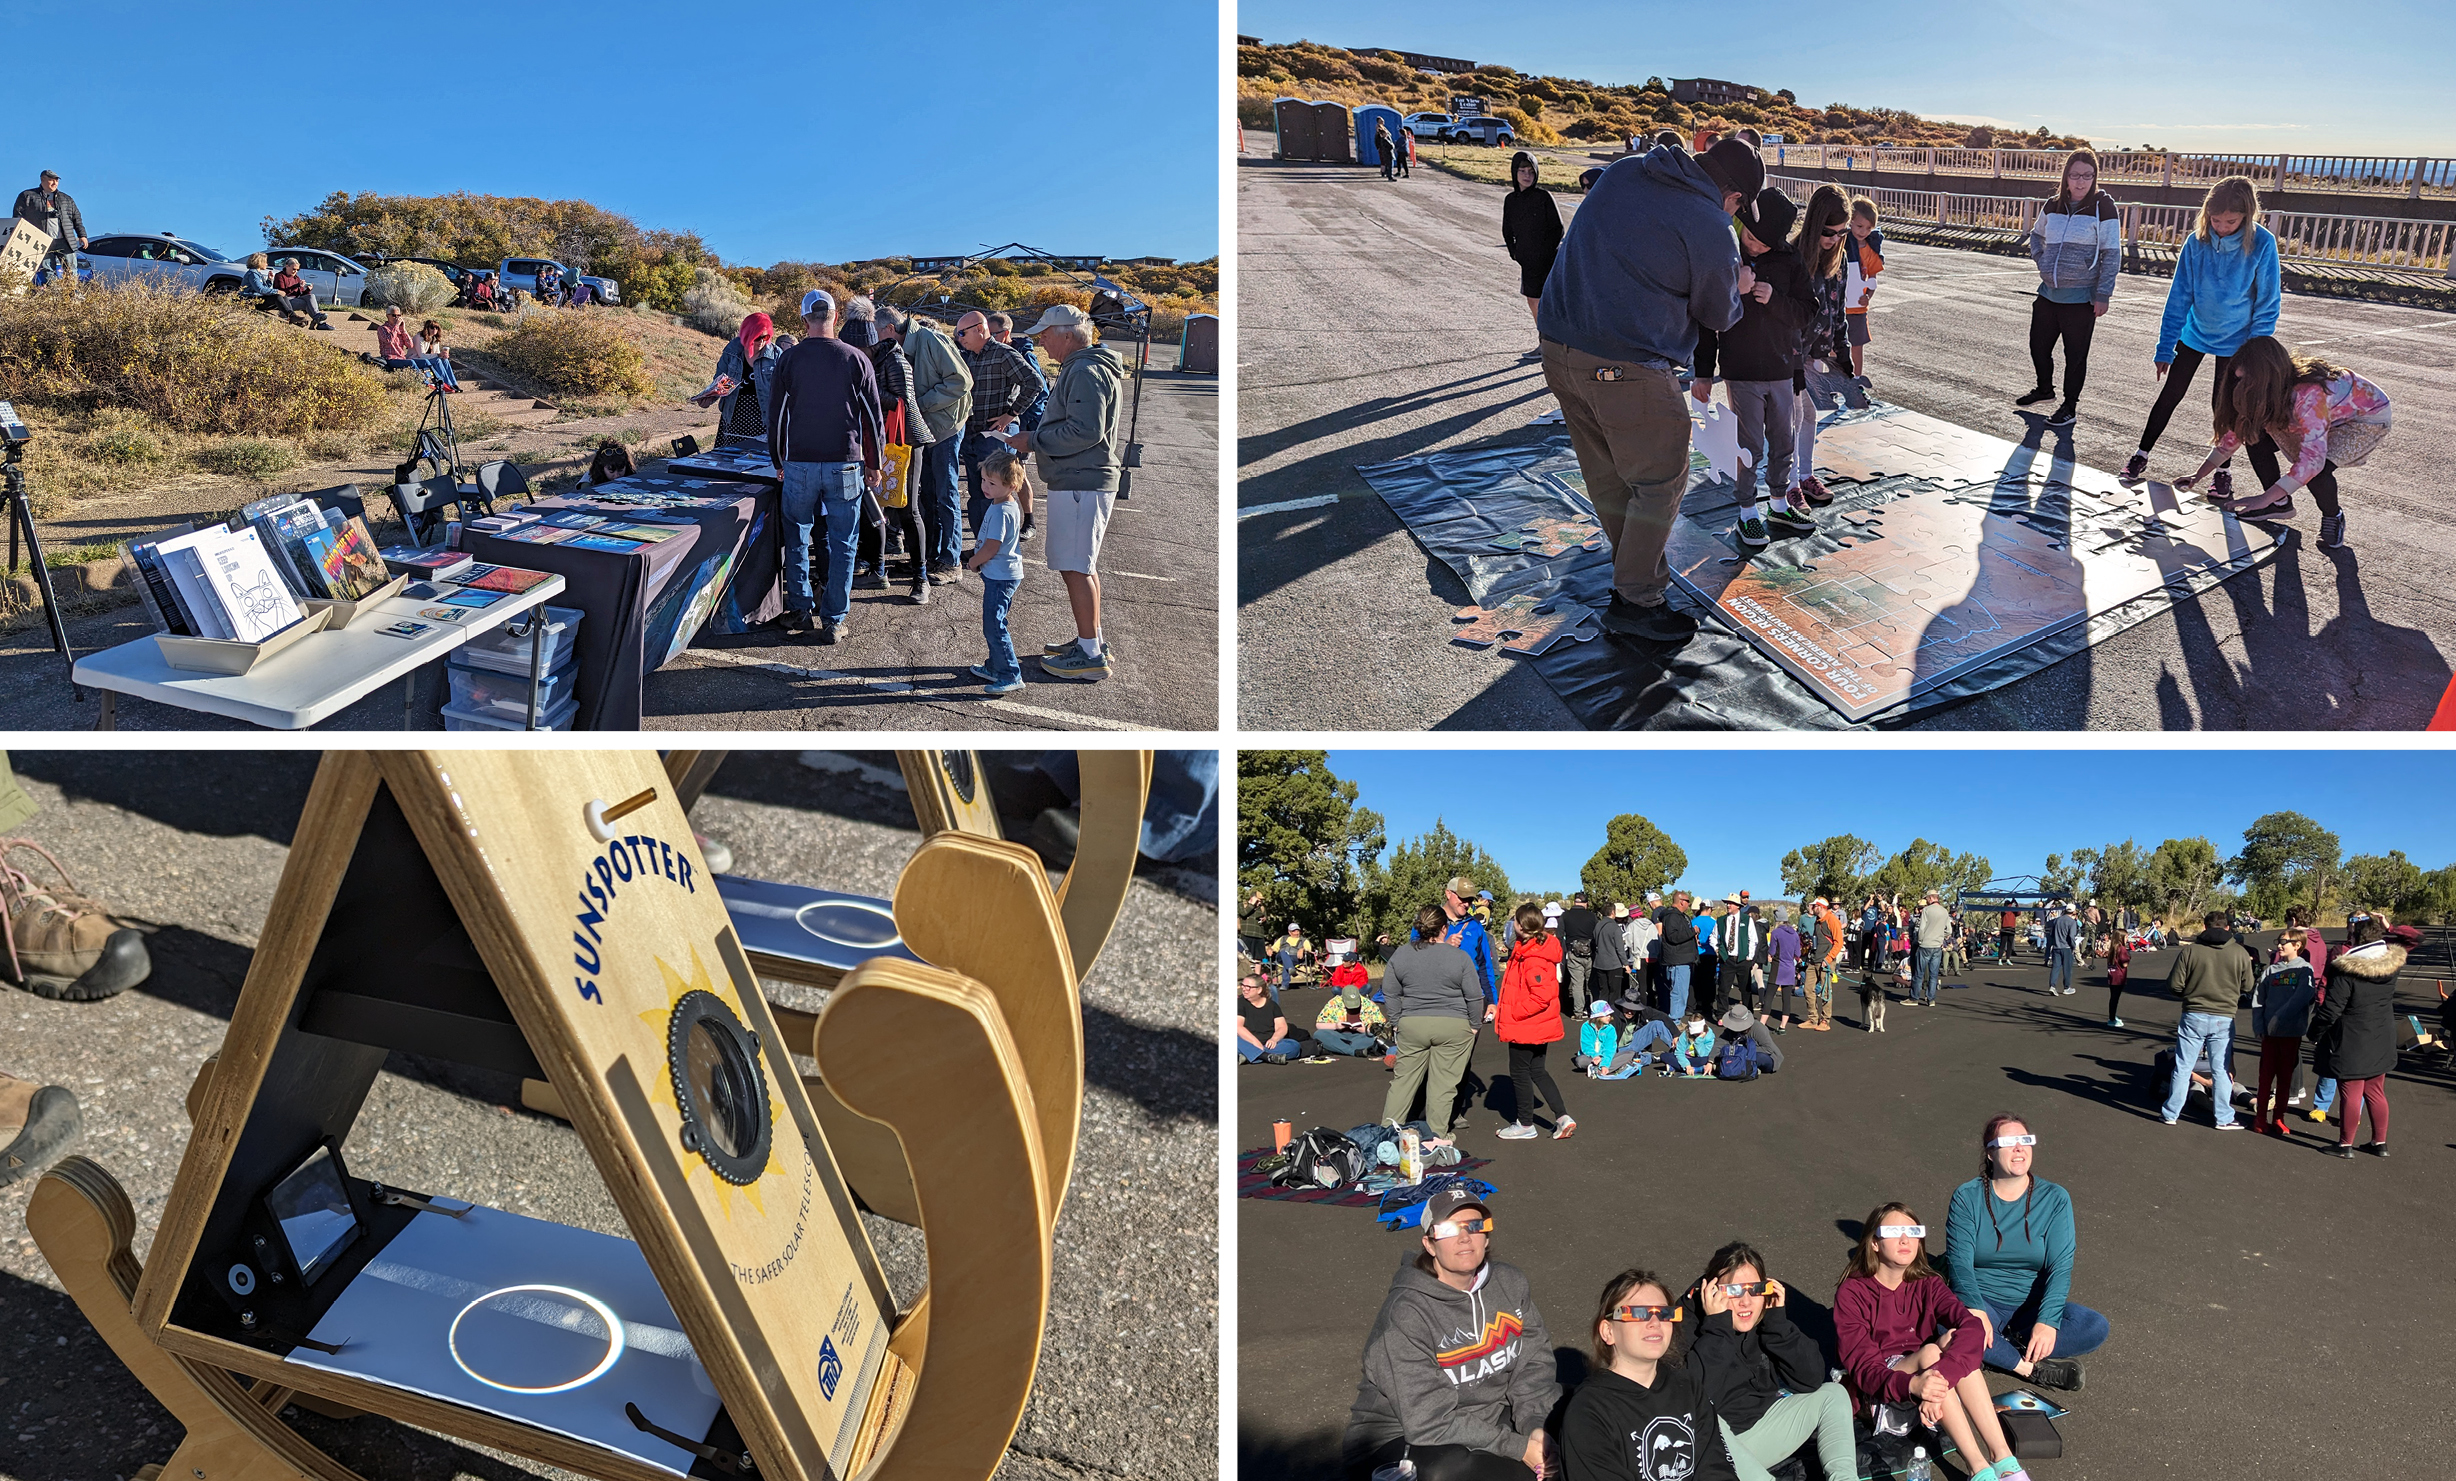 Photos of annular solar eclipse outreach activities at Mesa Verde National Park.